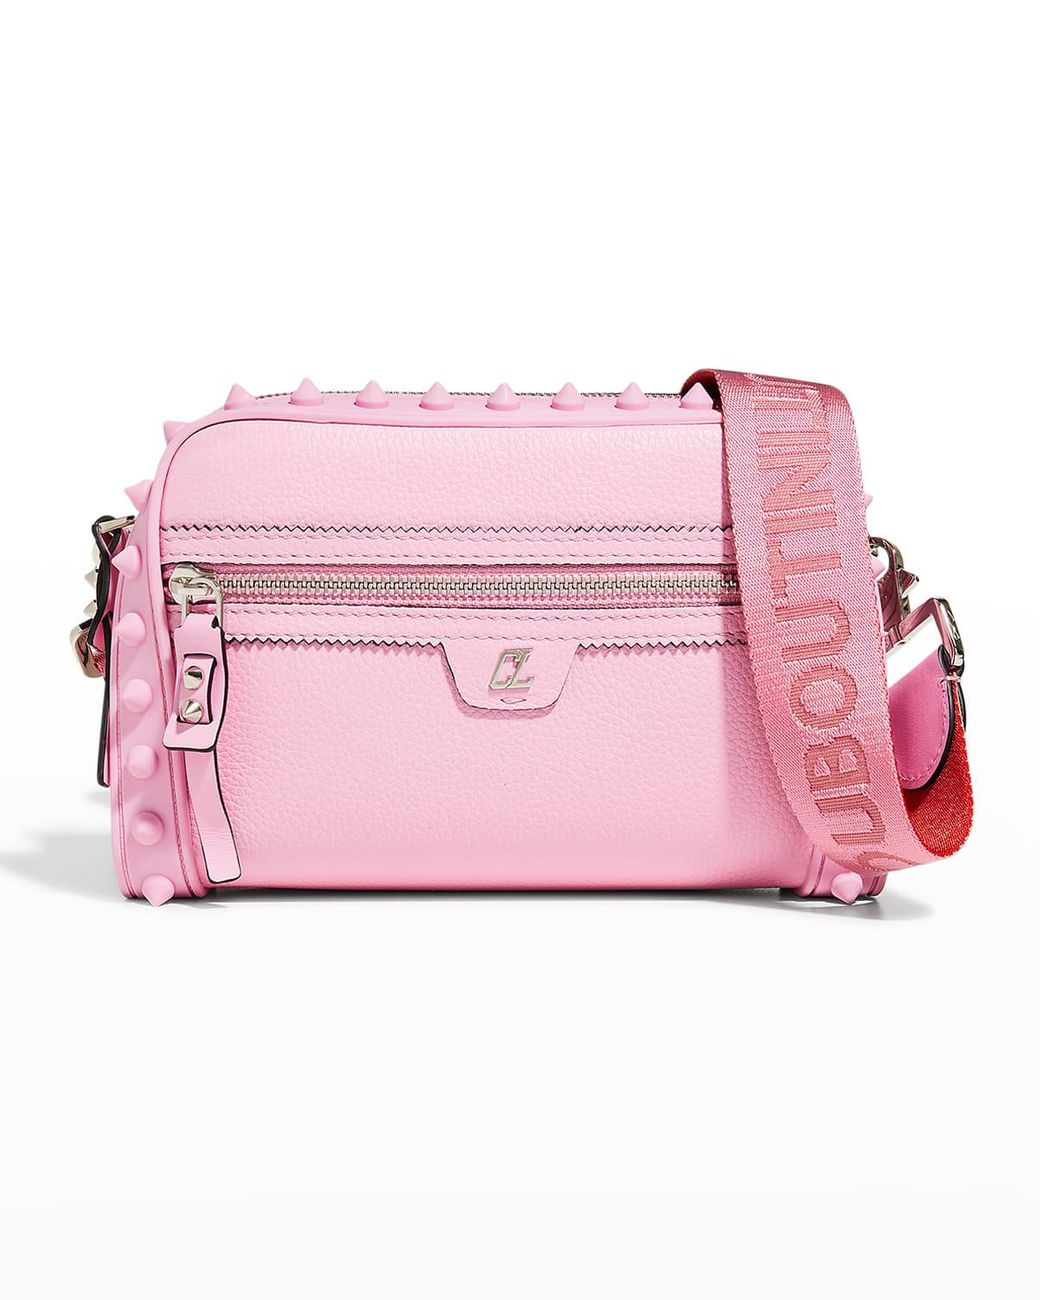 Christian Louboutin Loubitown Spike Zip Leather Crossbody Bag in Pink